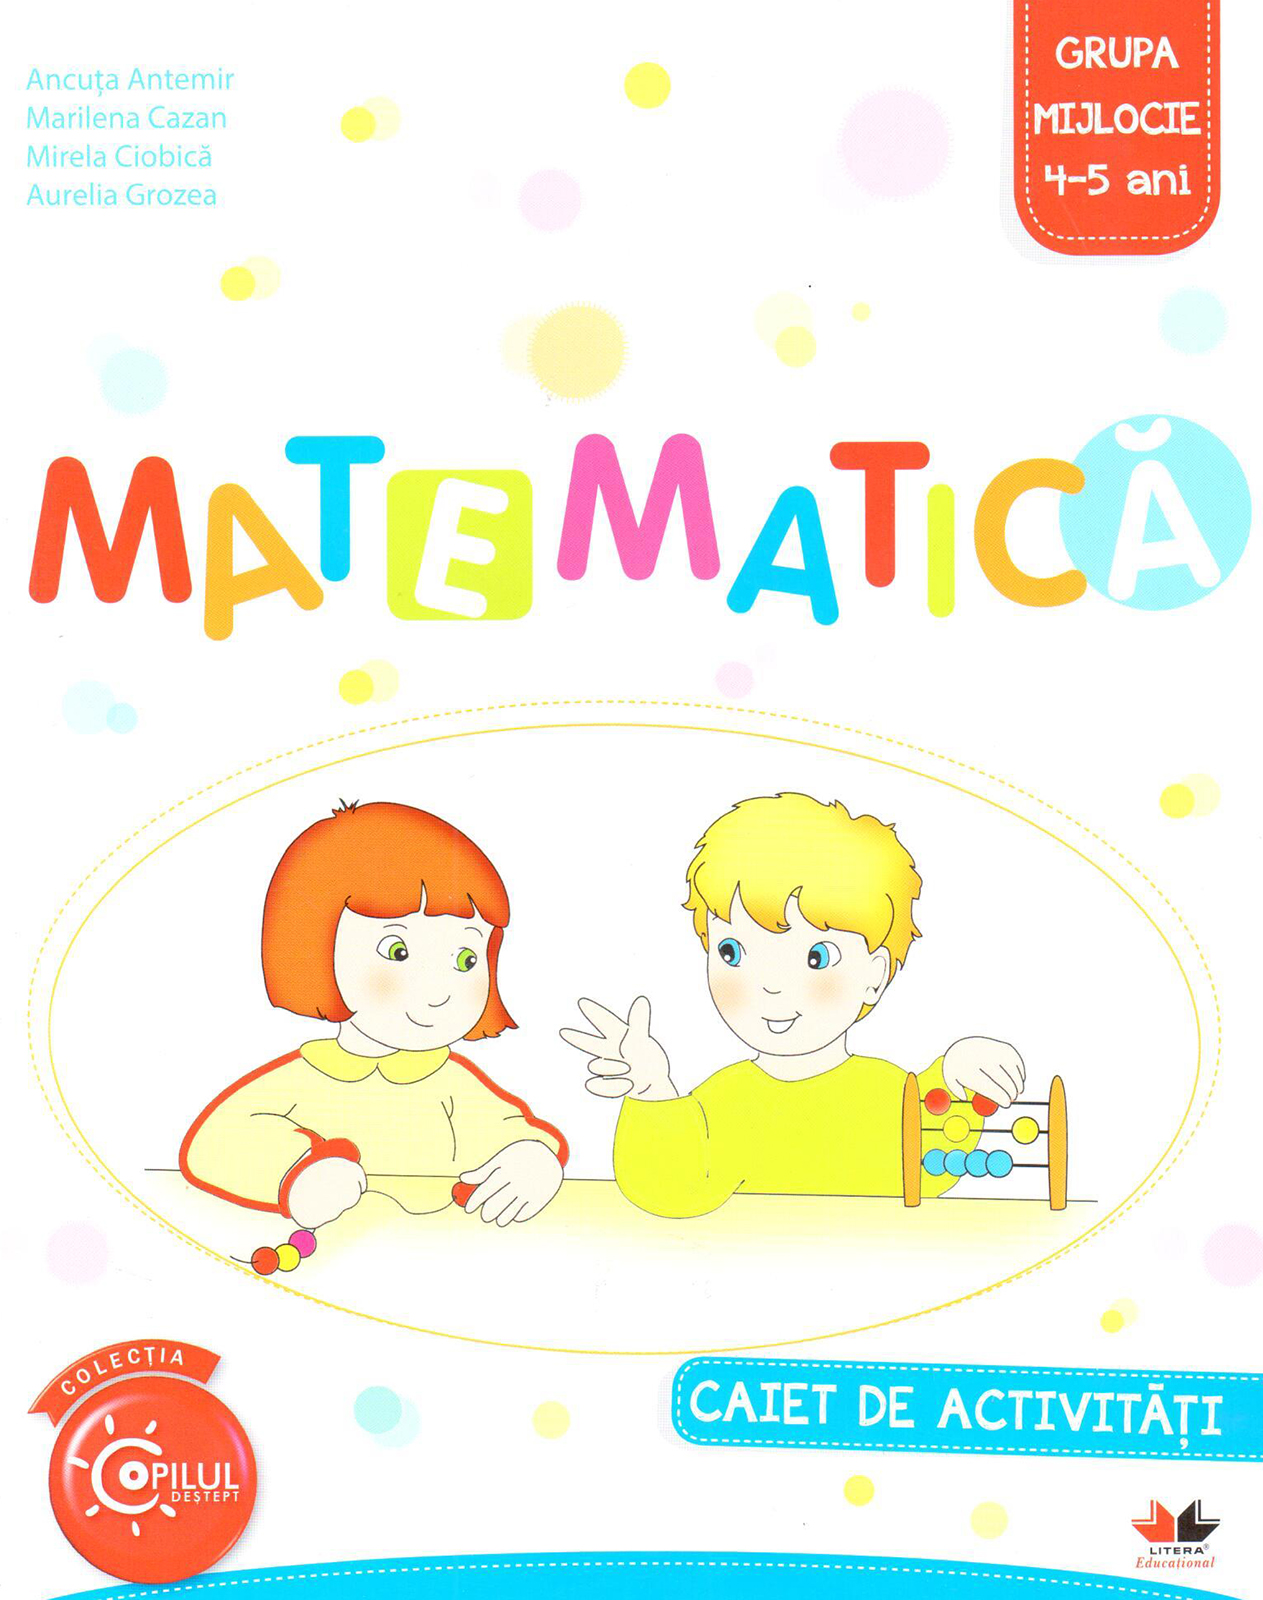 Matematica - Caiet de activitati, grupa mijlocie 4-5 ani | Ancuta Antemir, Marilena Cazan, Mirela Ciobica